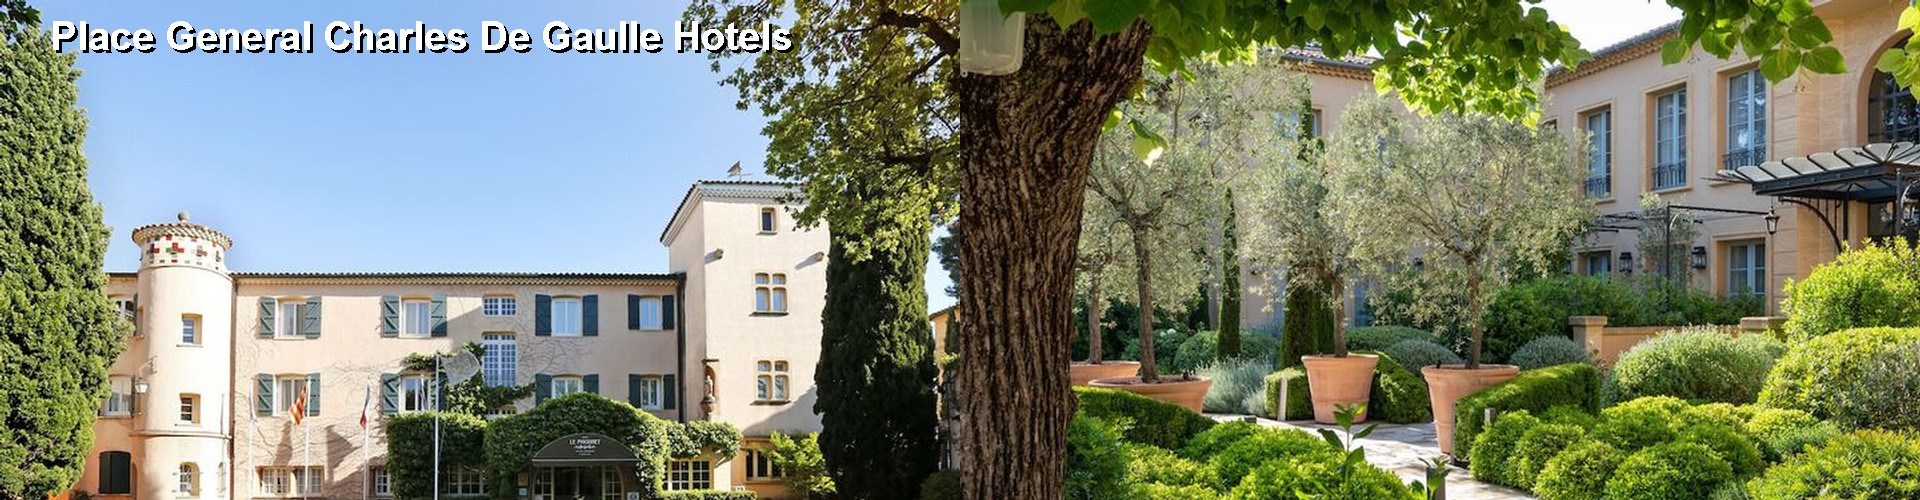 5 Best Hotels near Place General Charles De Gaulle